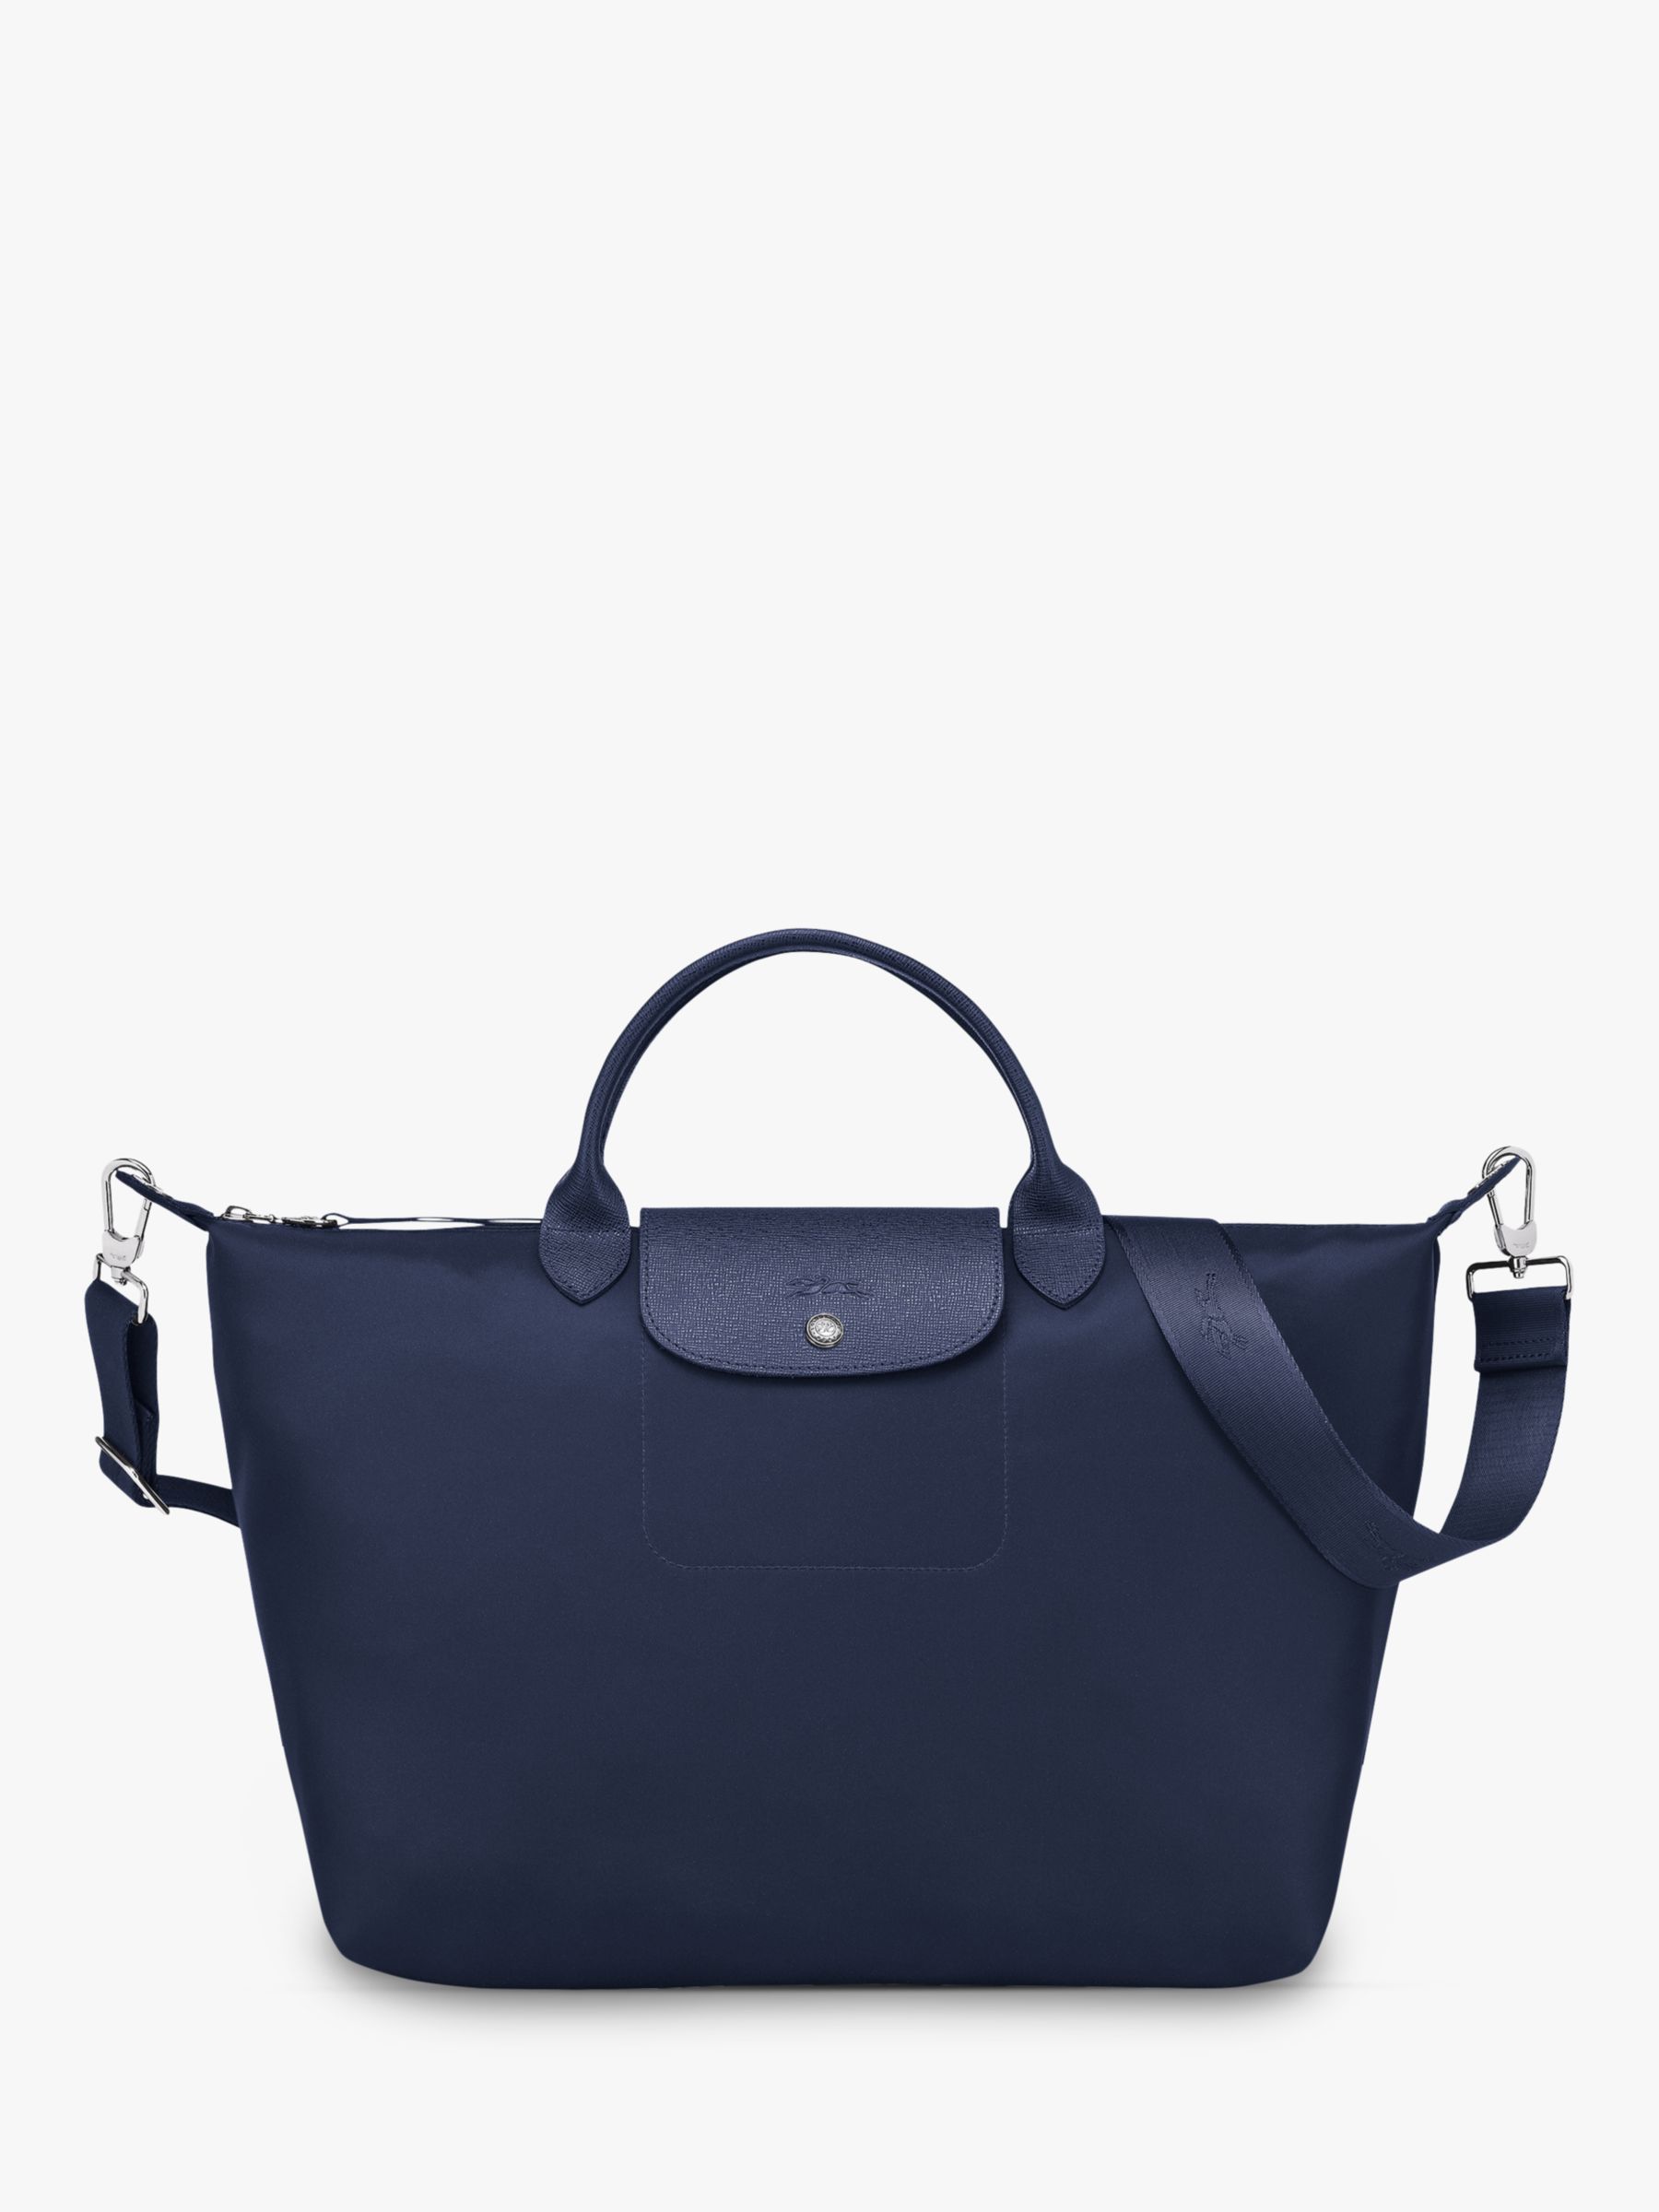 Longchamp Le Pliage Néo XL Top Handle Bag, Navy